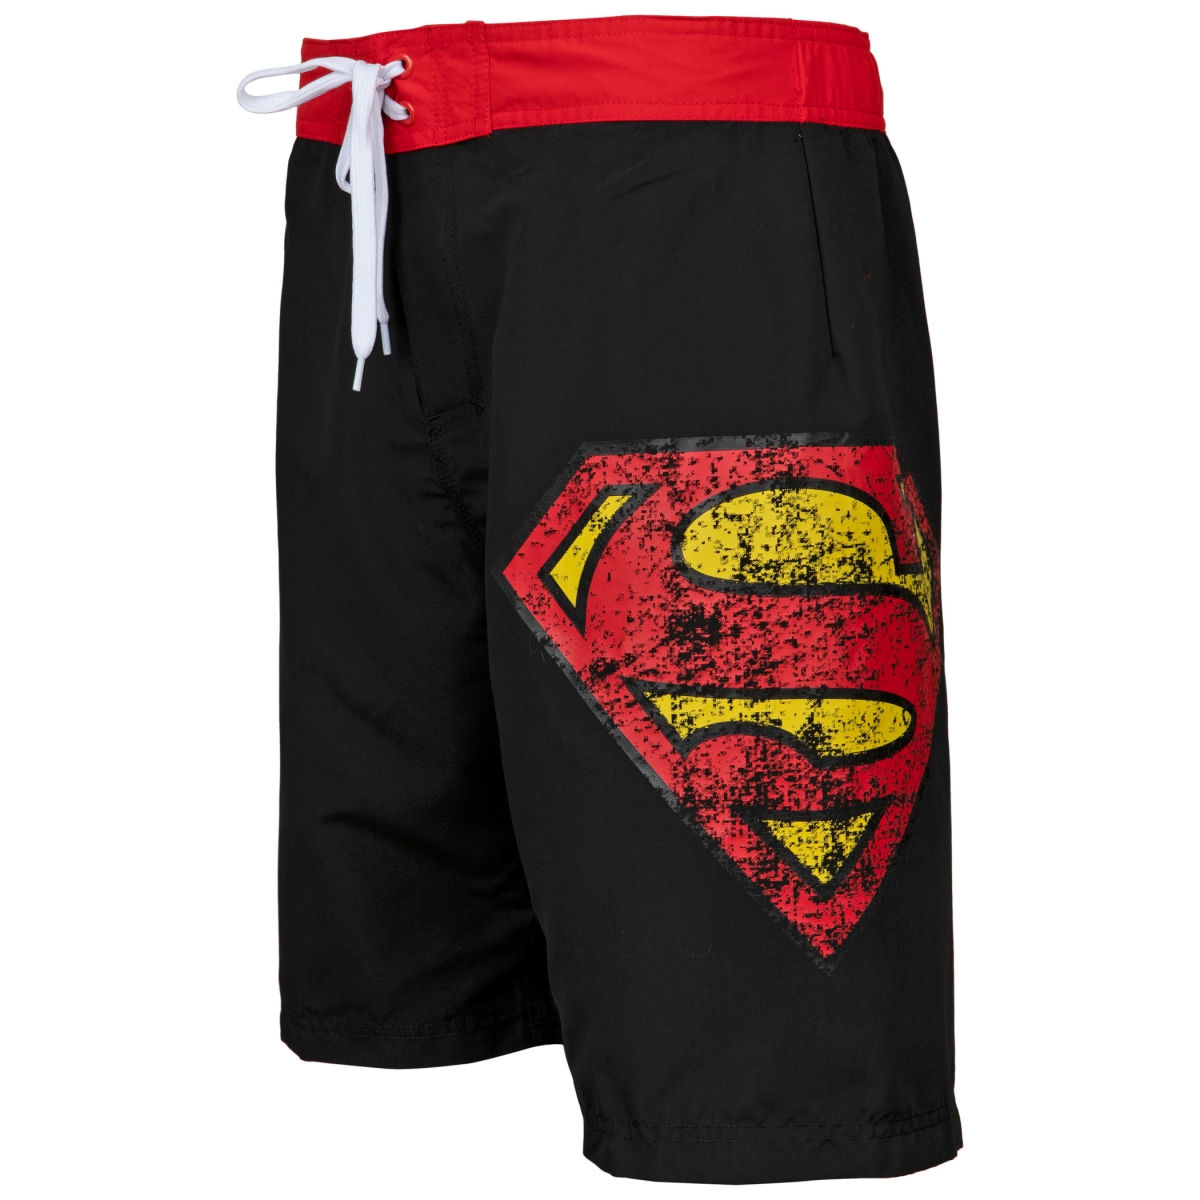 Picture of Superman 803465-xlarge 40-42 Superman Symbol Swim Board Shorts, Black - Extra Large 40-42